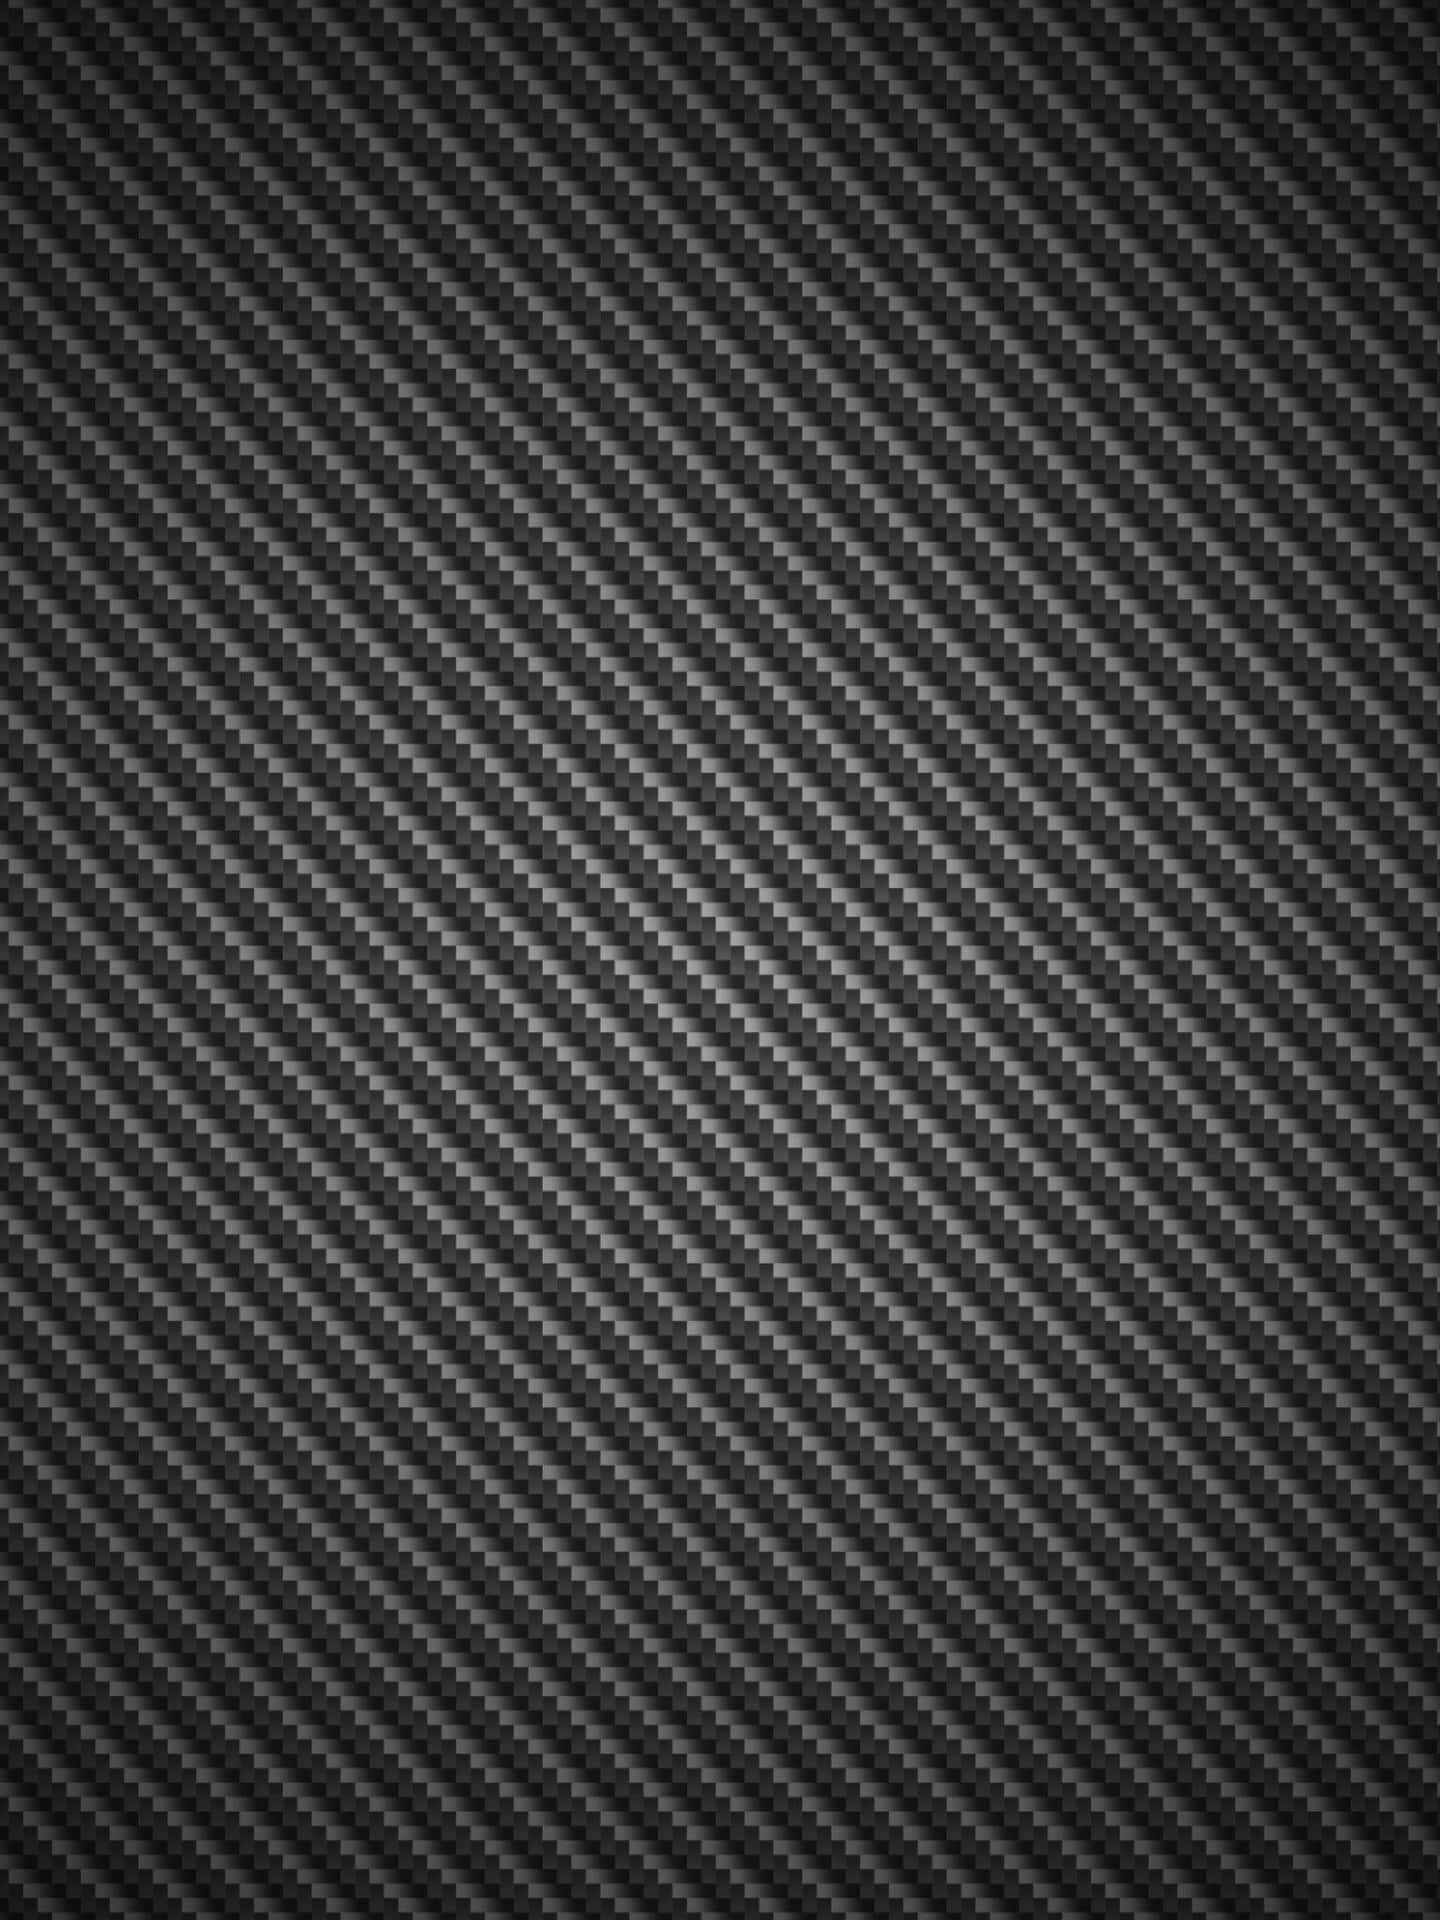 Striking black carbon fiber texture Wallpaper